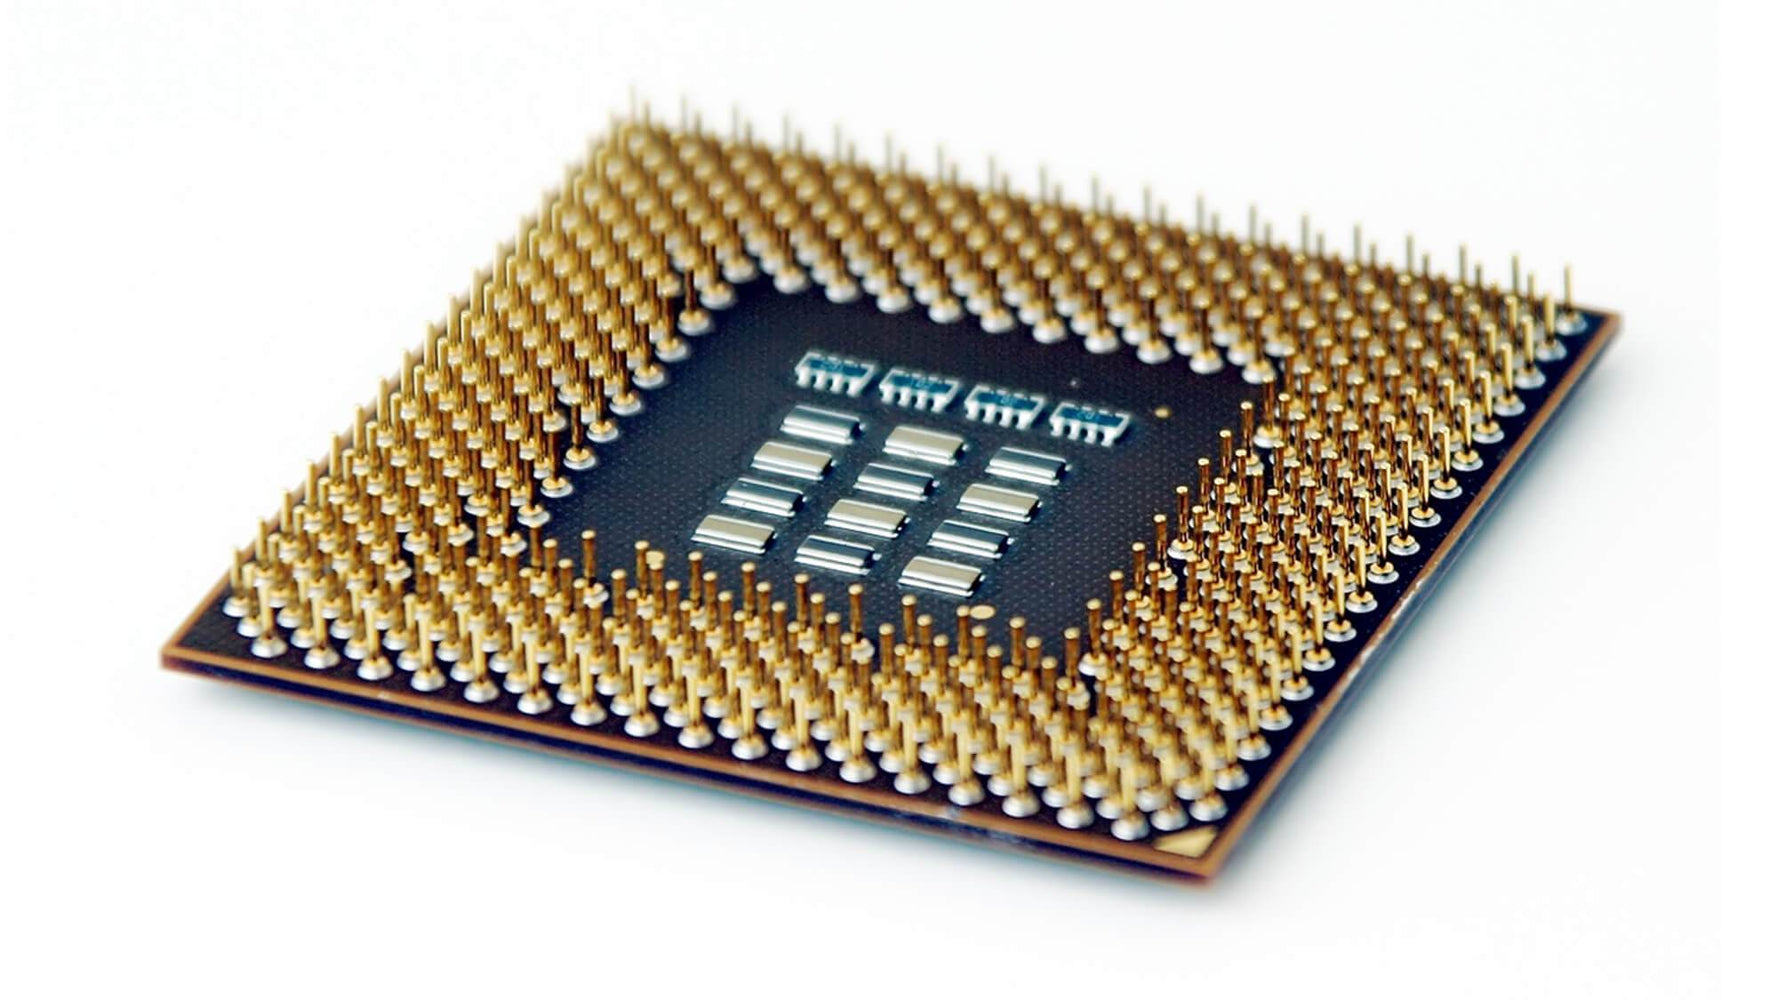 WH338AV - HP 2.26GHz 2.5GT/s DMI 3MB L3 Cache Socket BGA1288 / PGA988 Intel Core i3-350M 2-Core Processor